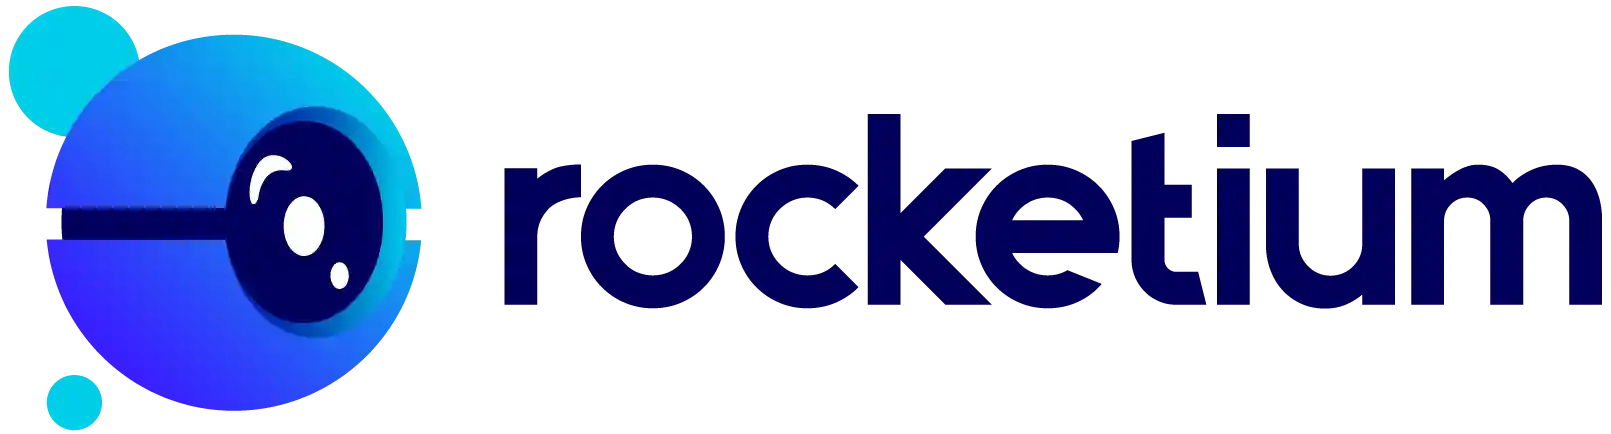 Rocketium 프로모션 코드 